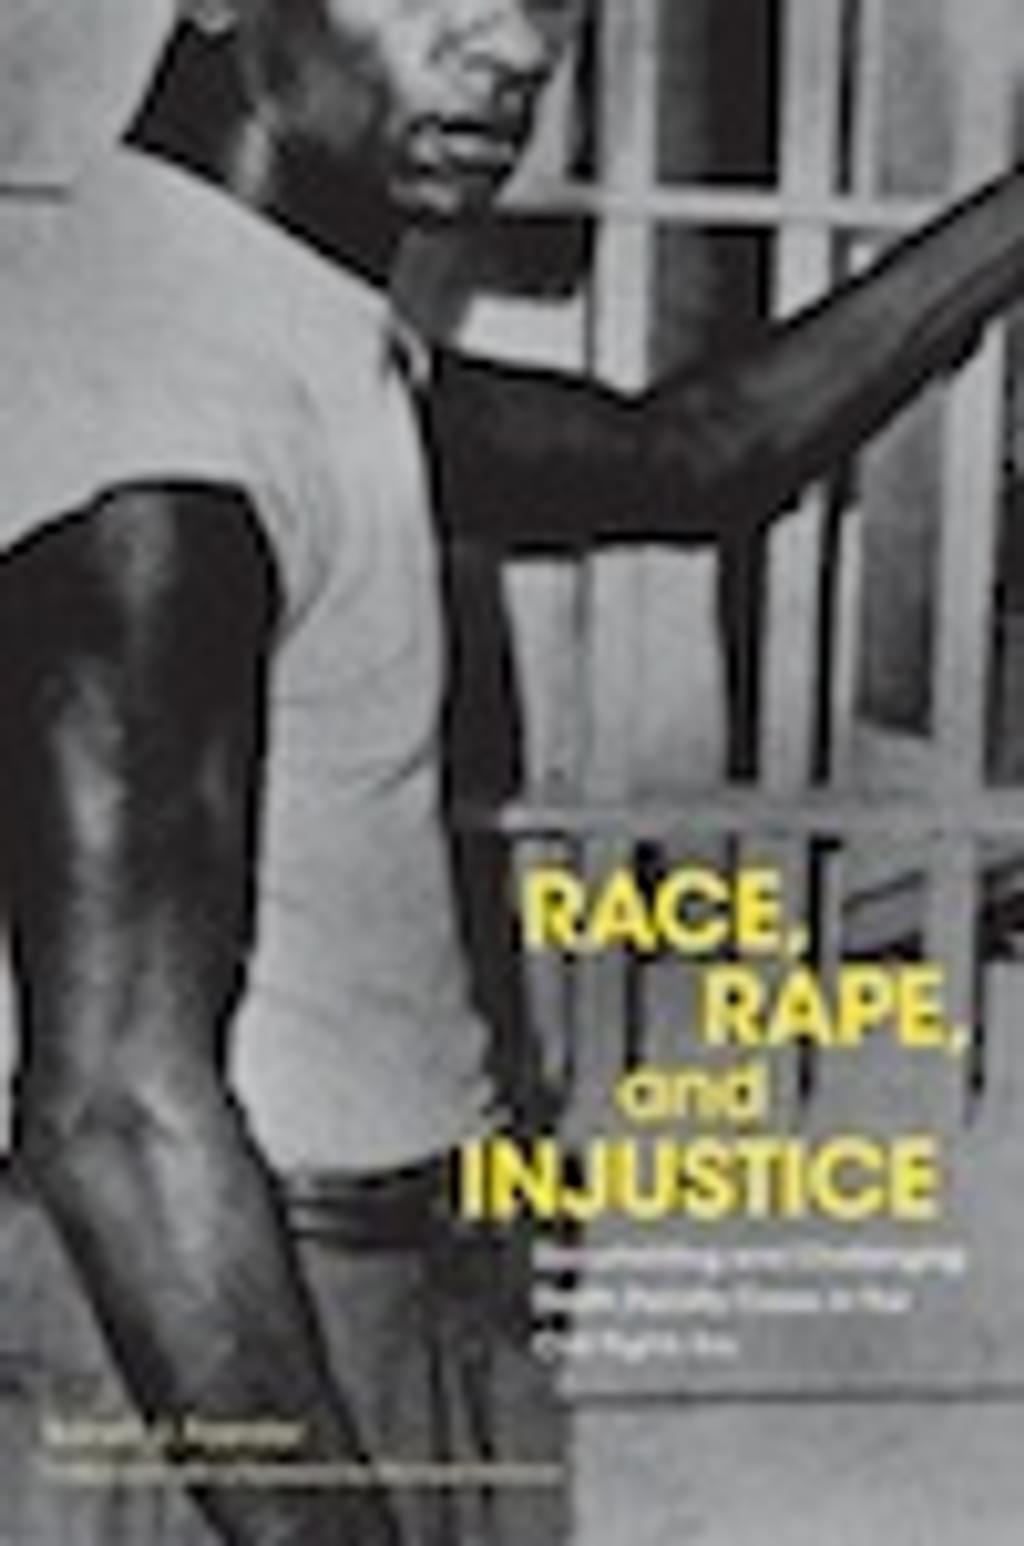 BOOKS: "Race, Rape, and Injustice"